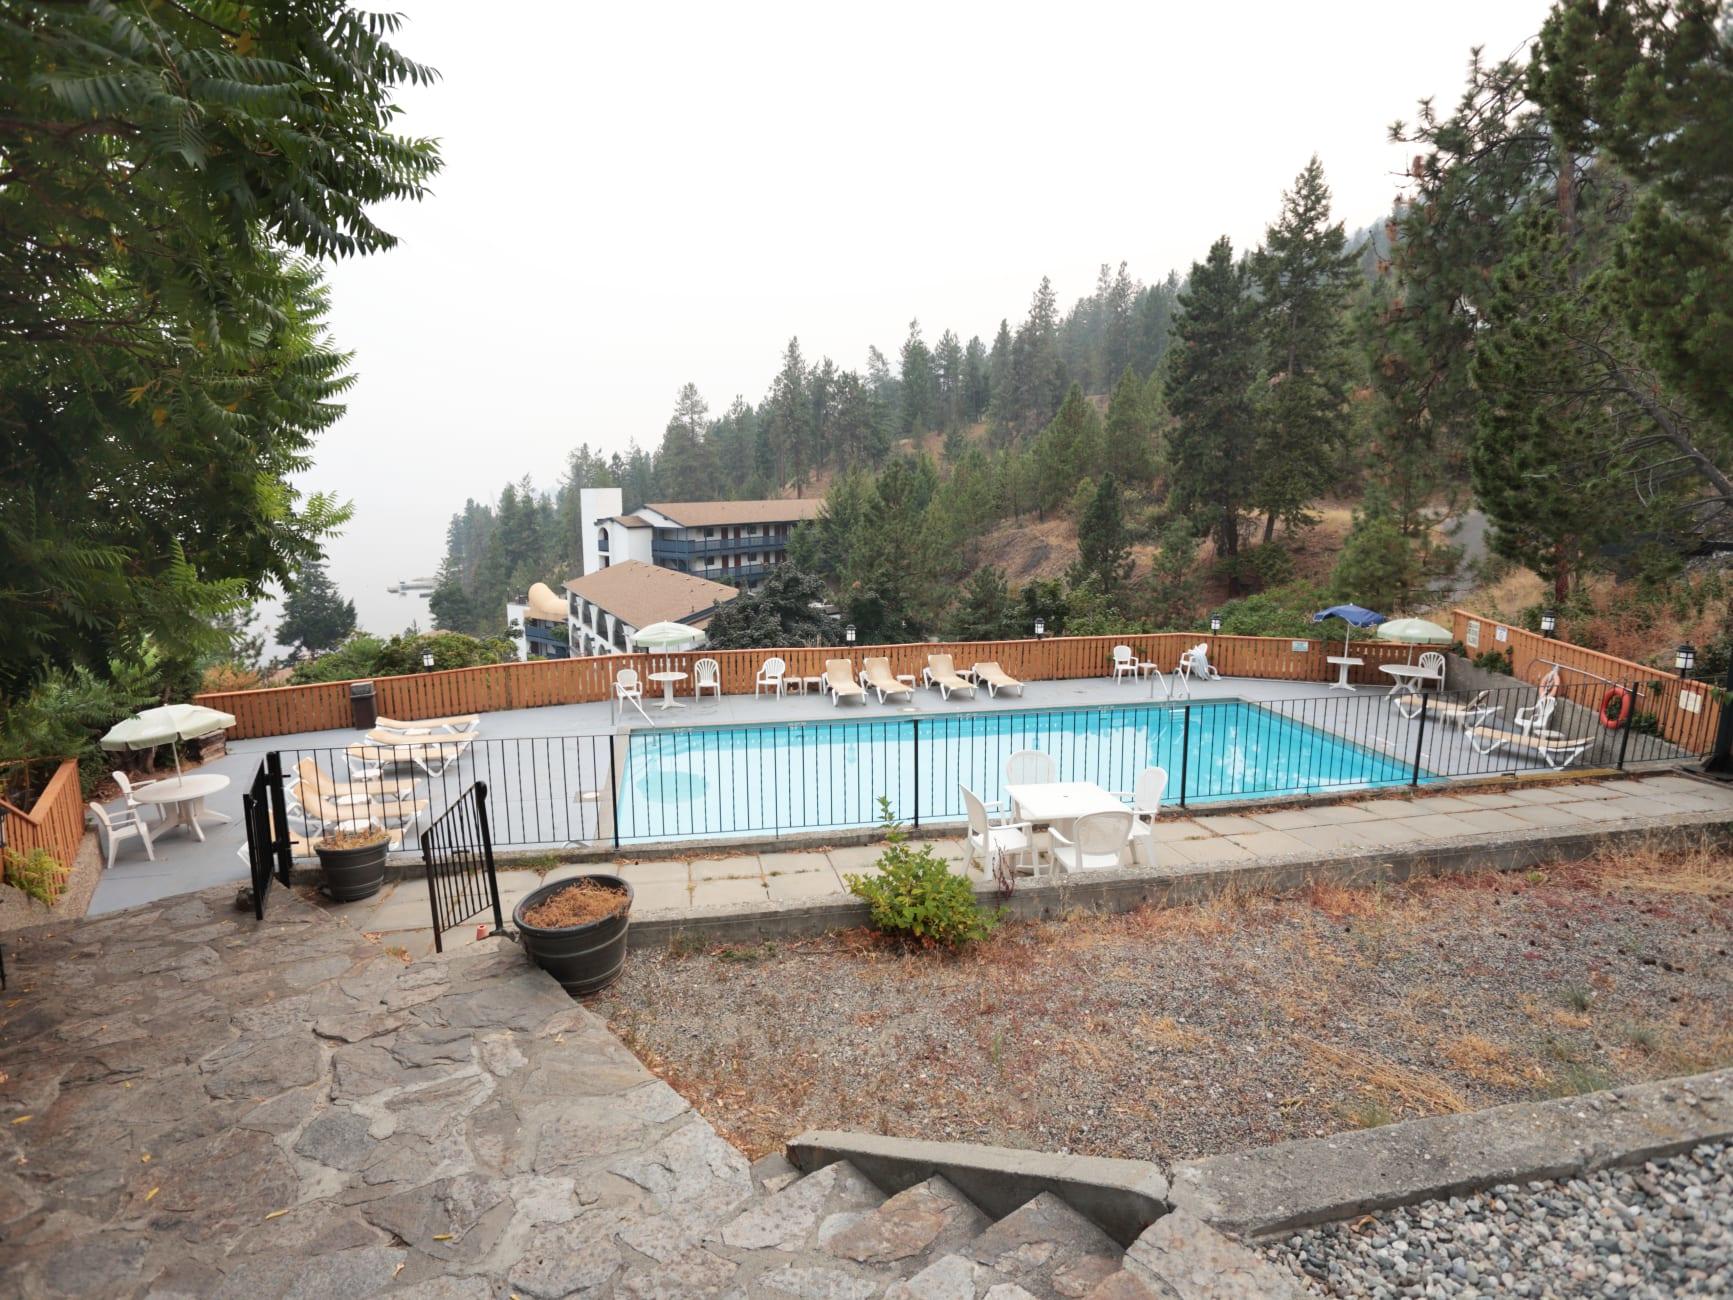 Lake Okanagan Resort pool view